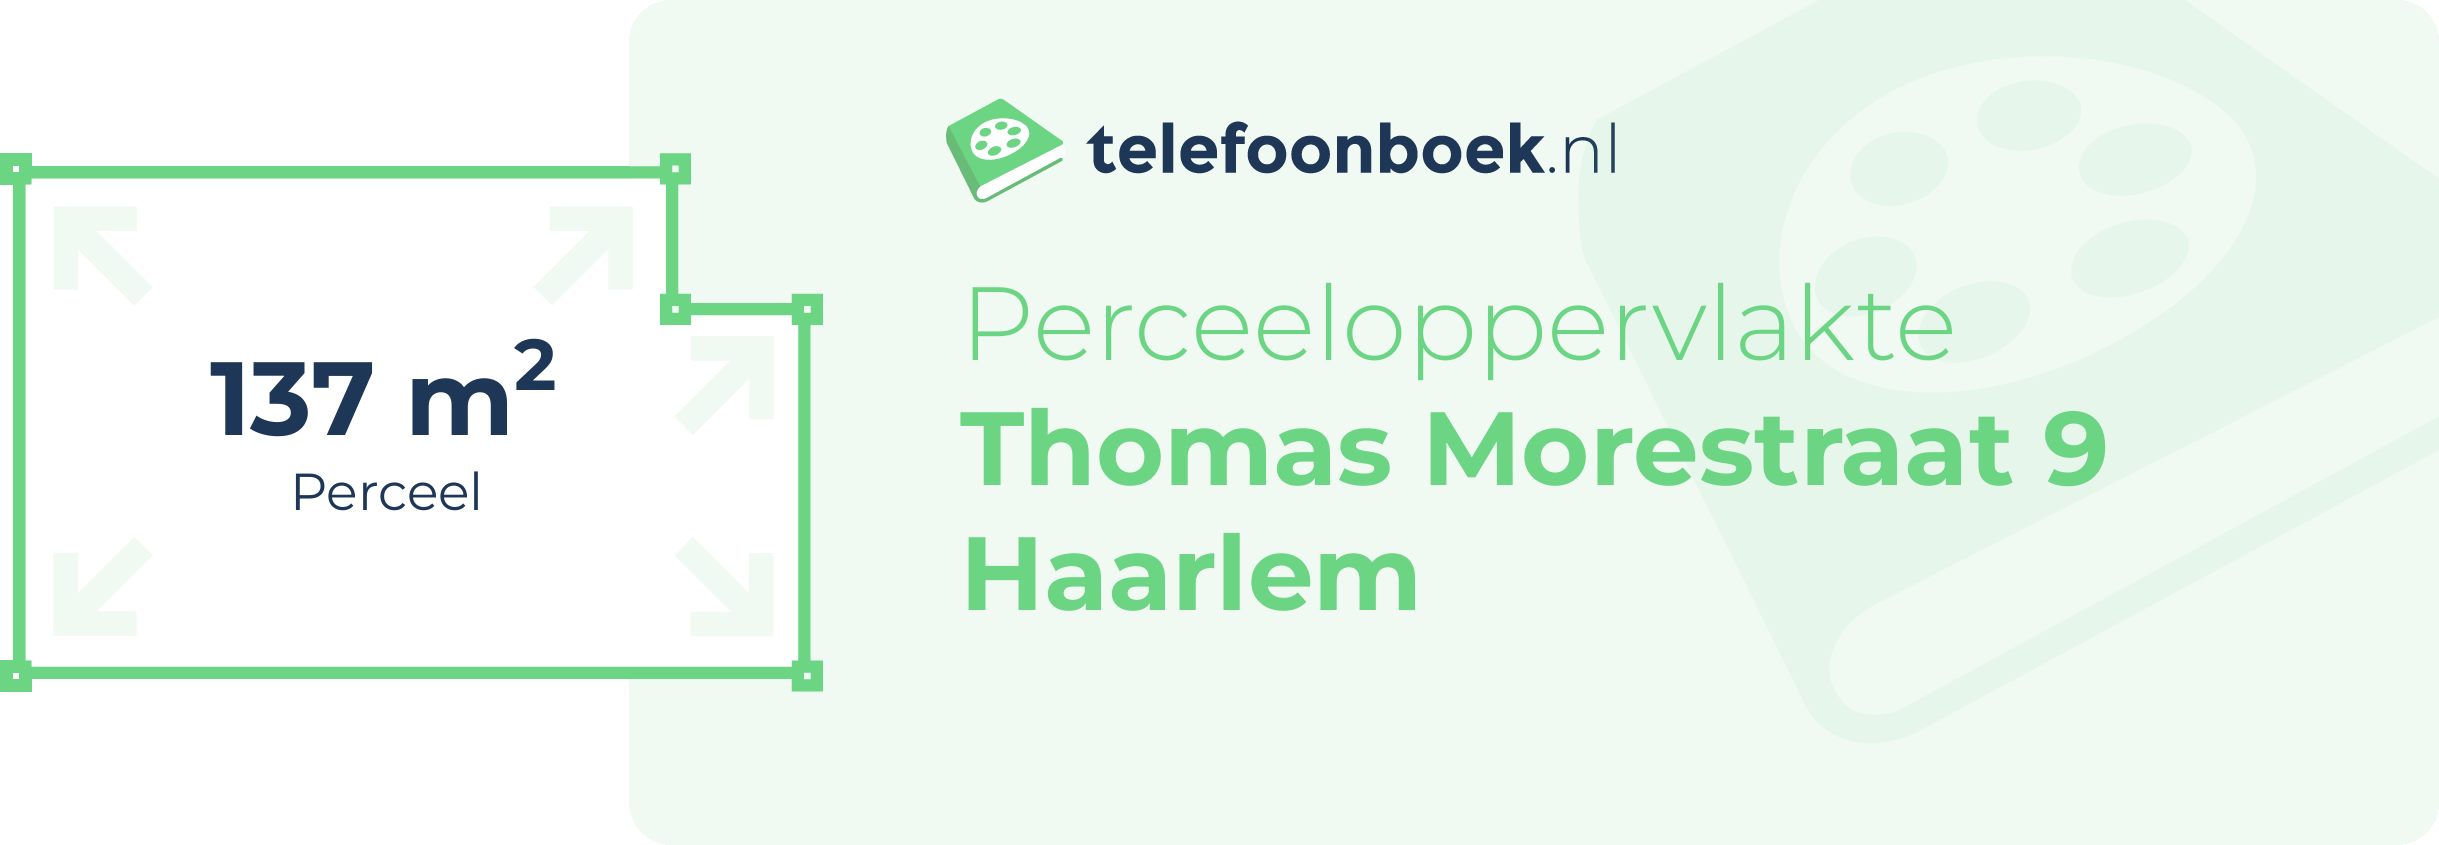 Perceeloppervlakte Thomas Morestraat 9 Haarlem